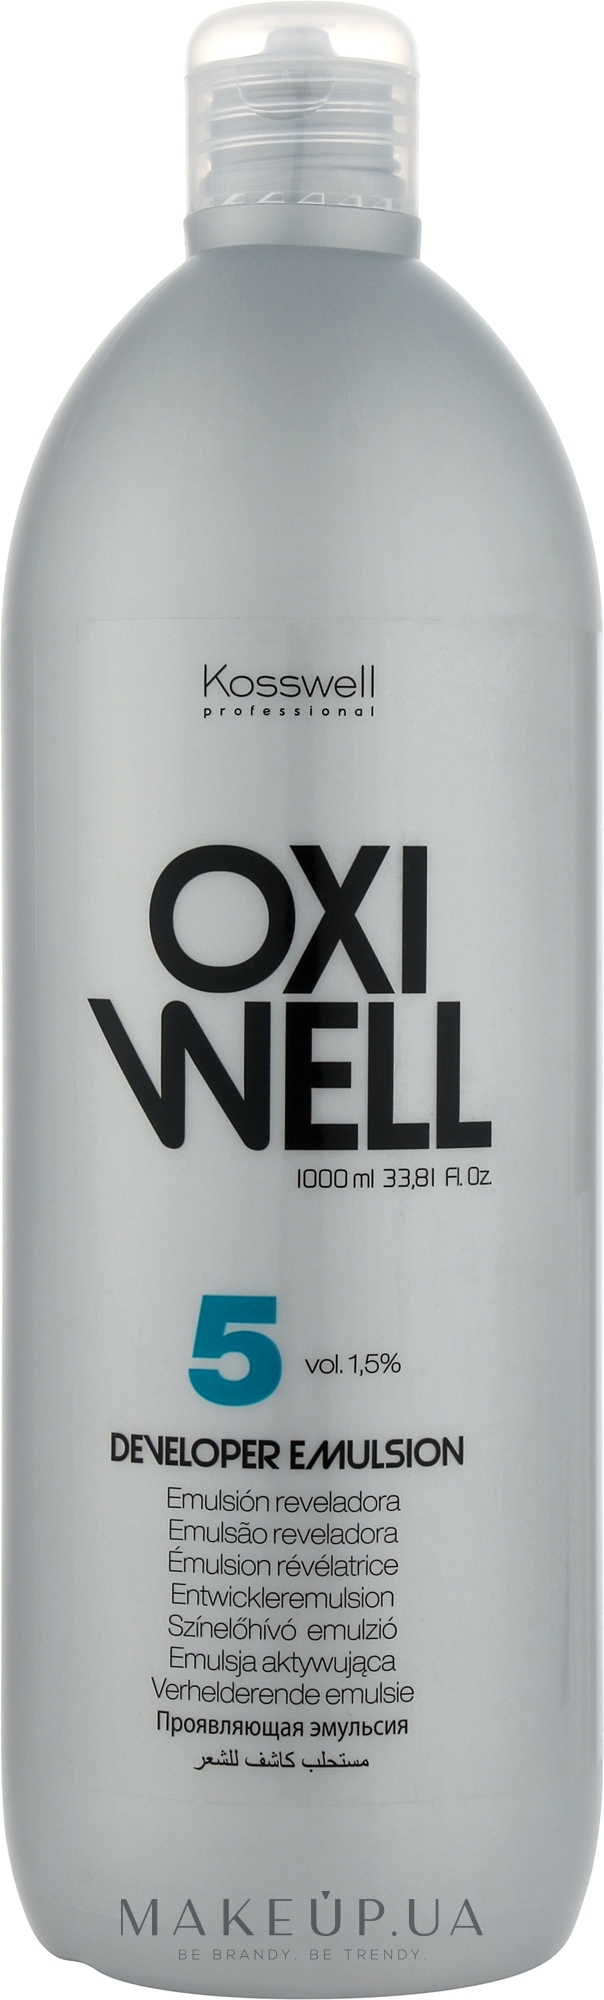 Окислювальна емульсія, 1.5% - Kosswell Professional Equium Oxidizing Emulsion Oxiwell 1,5% 5 vol — фото 1000ml